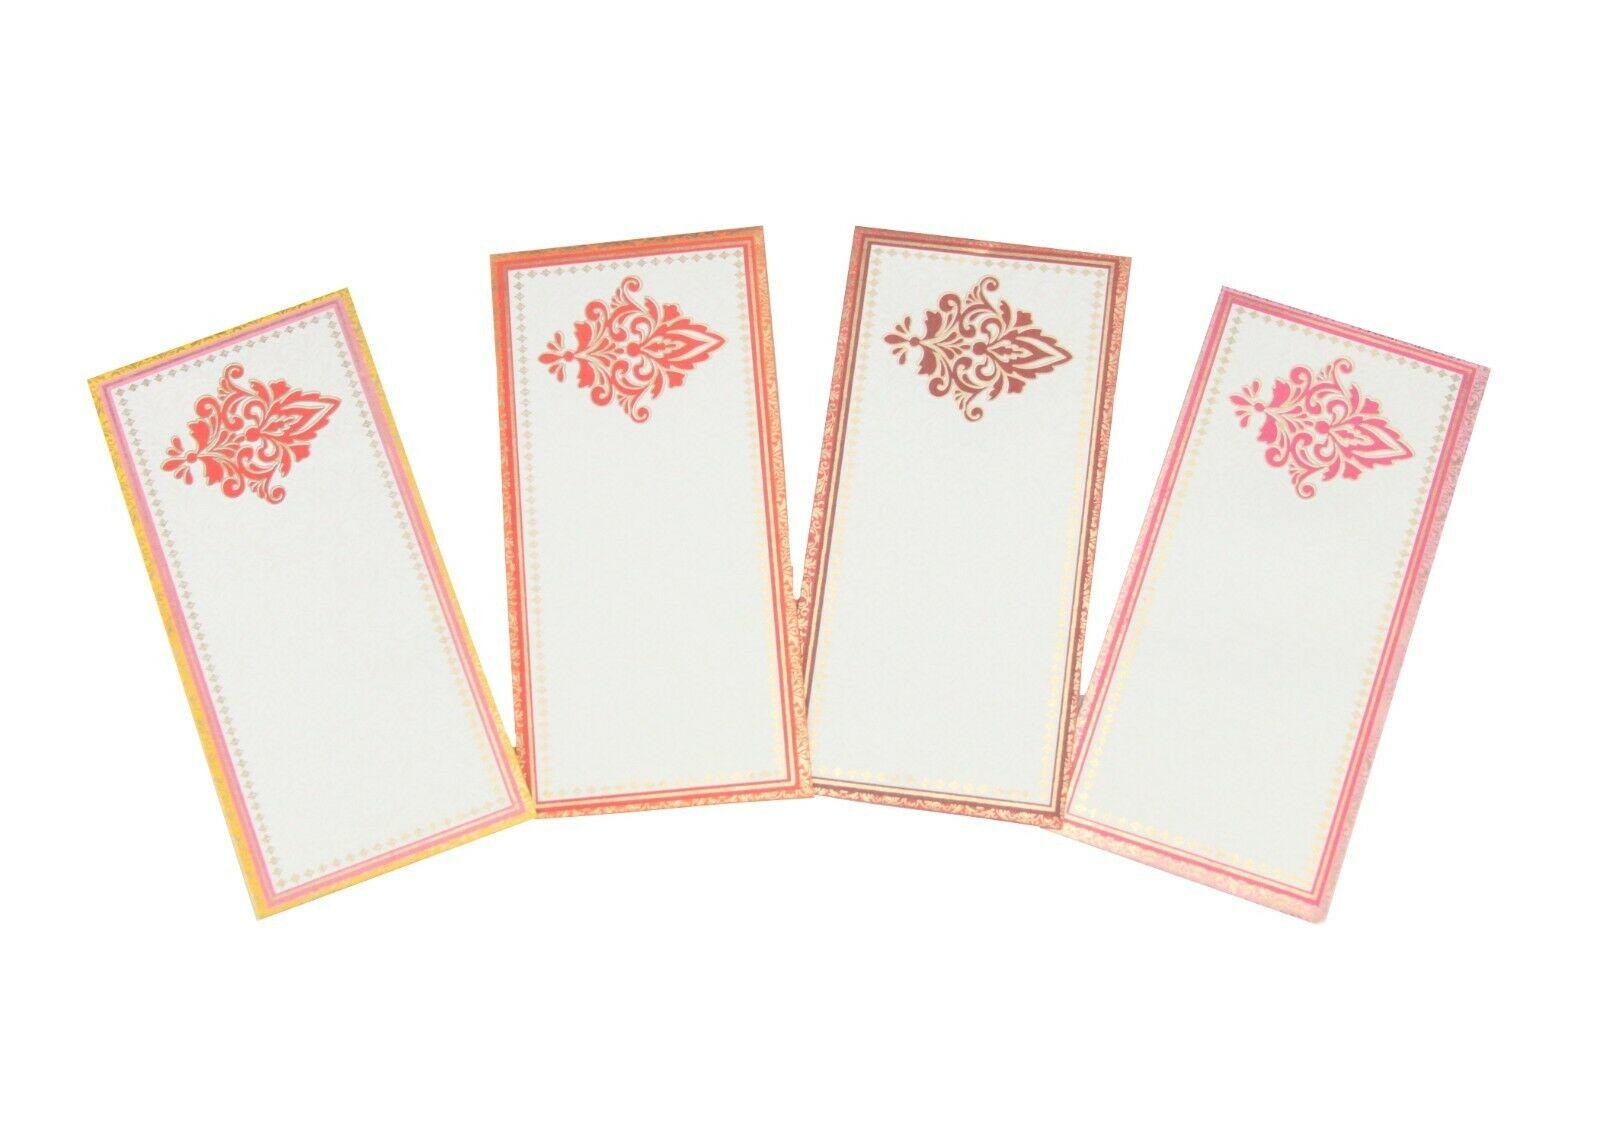 NEXXA Shagun Gift Envelope Assorted Color Designs Money card Pack of 10+2 Free 